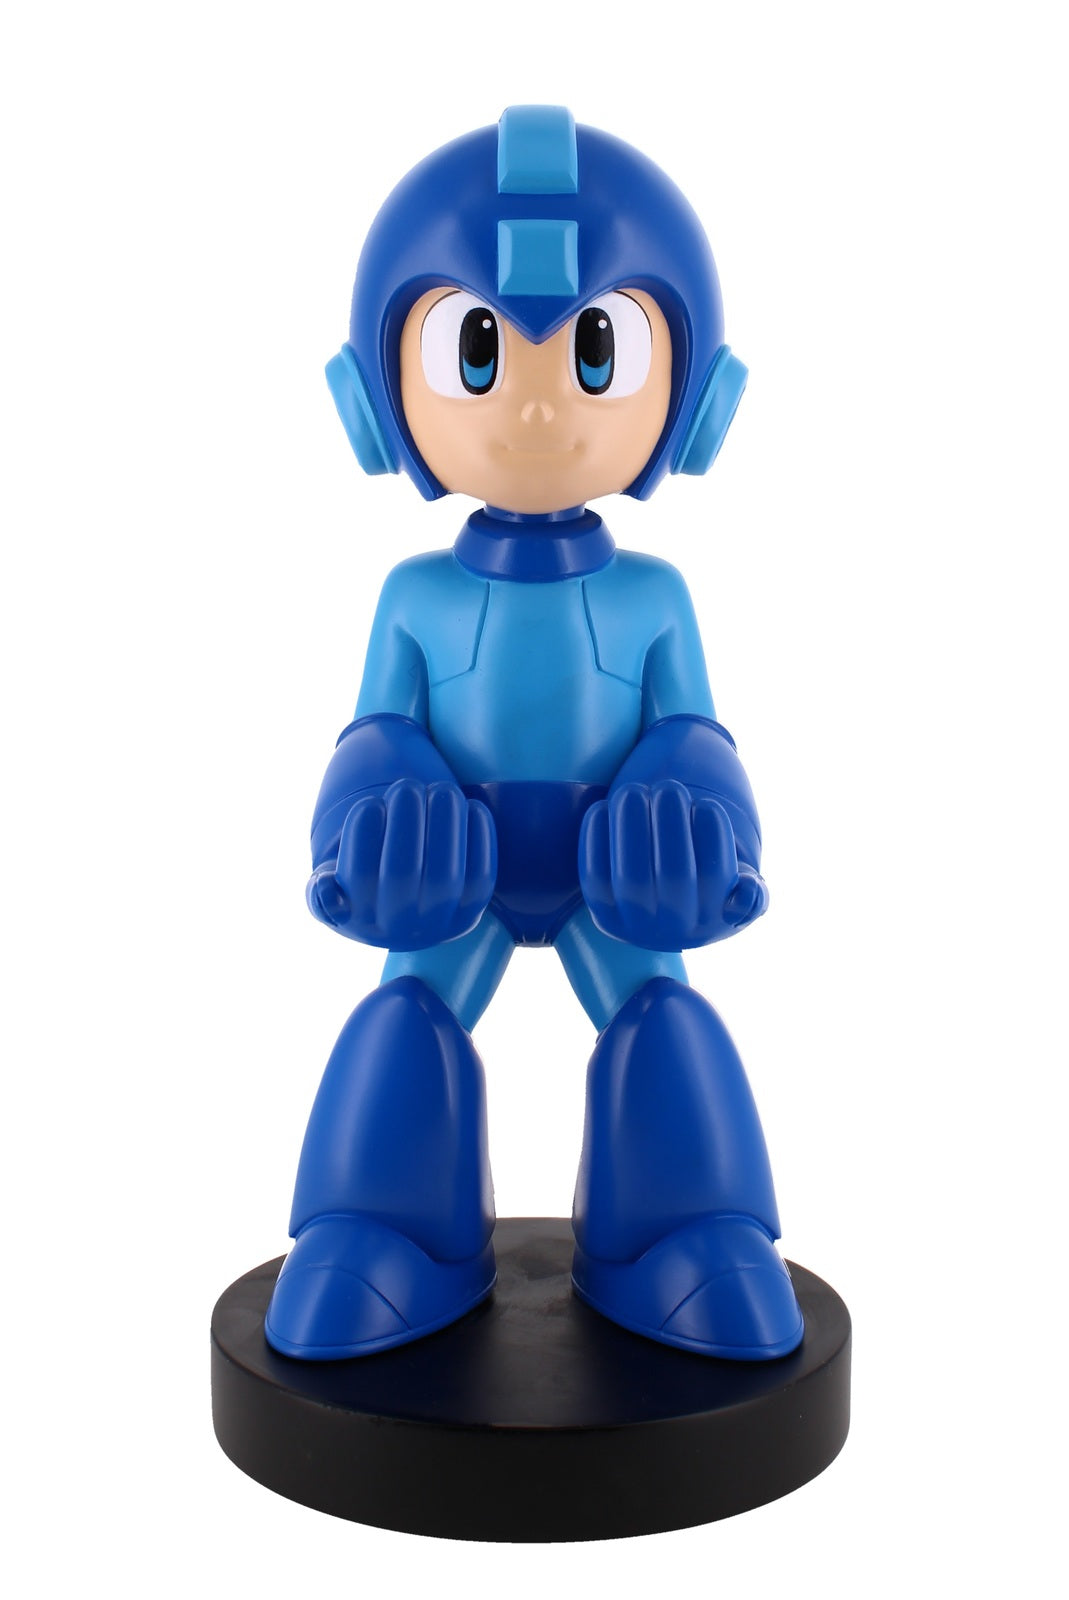 Cable Guy Controller Holder - Mega Man - Xbox Series X